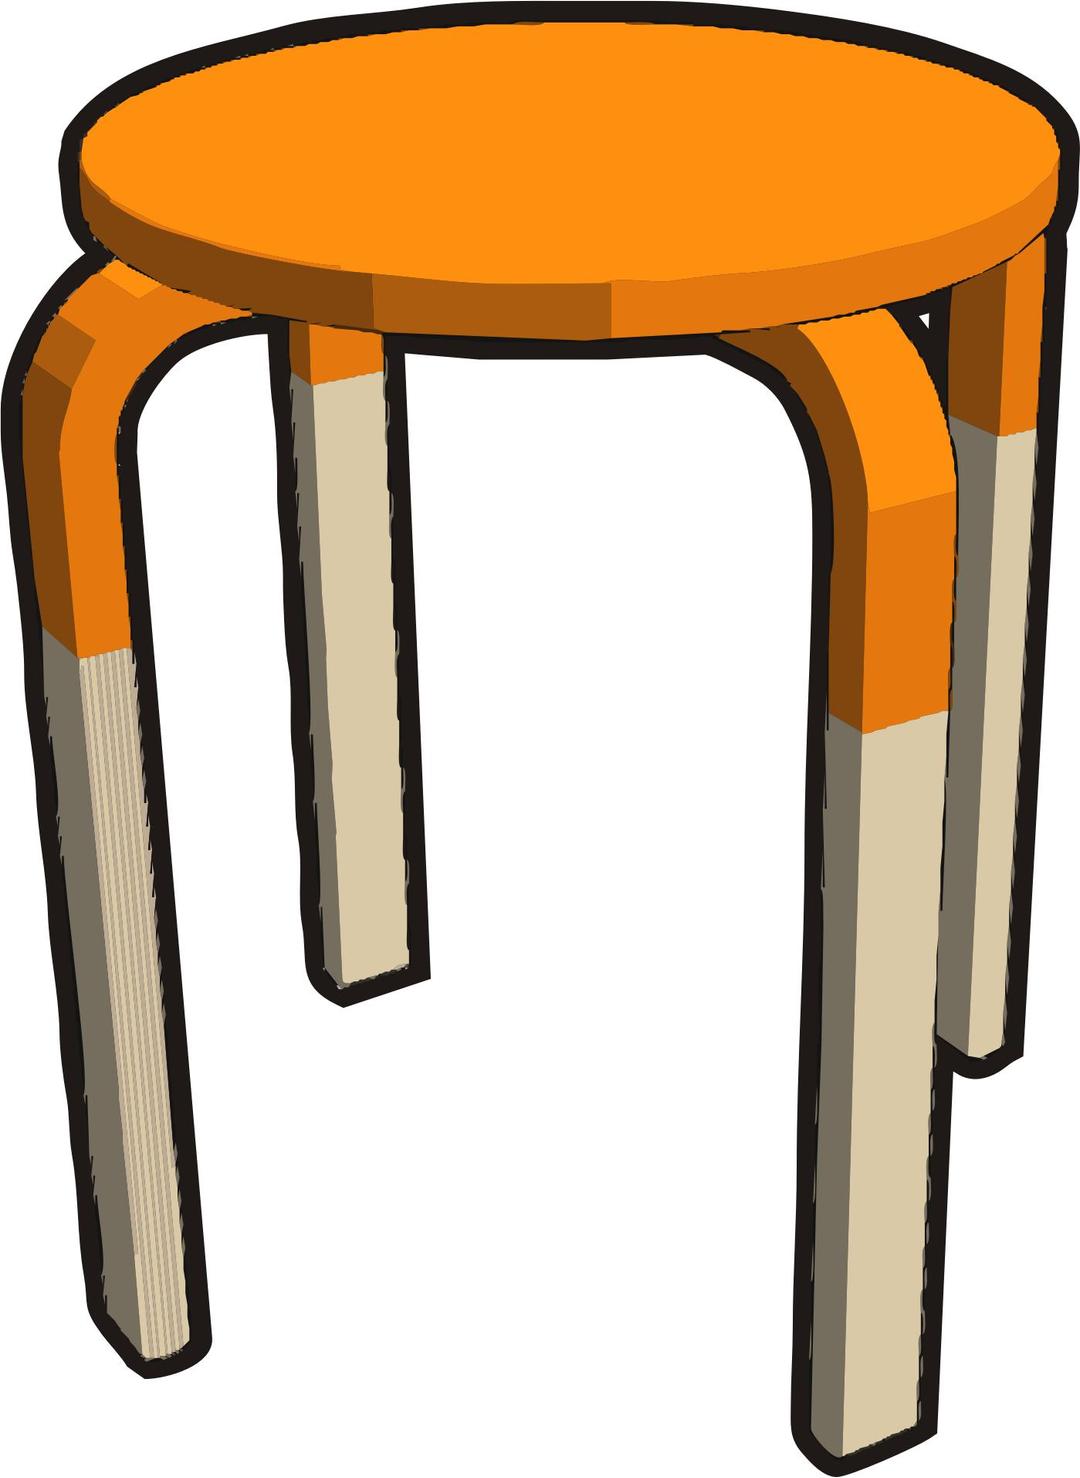 Ikea stuff - Frosta stool, half orange png transparent